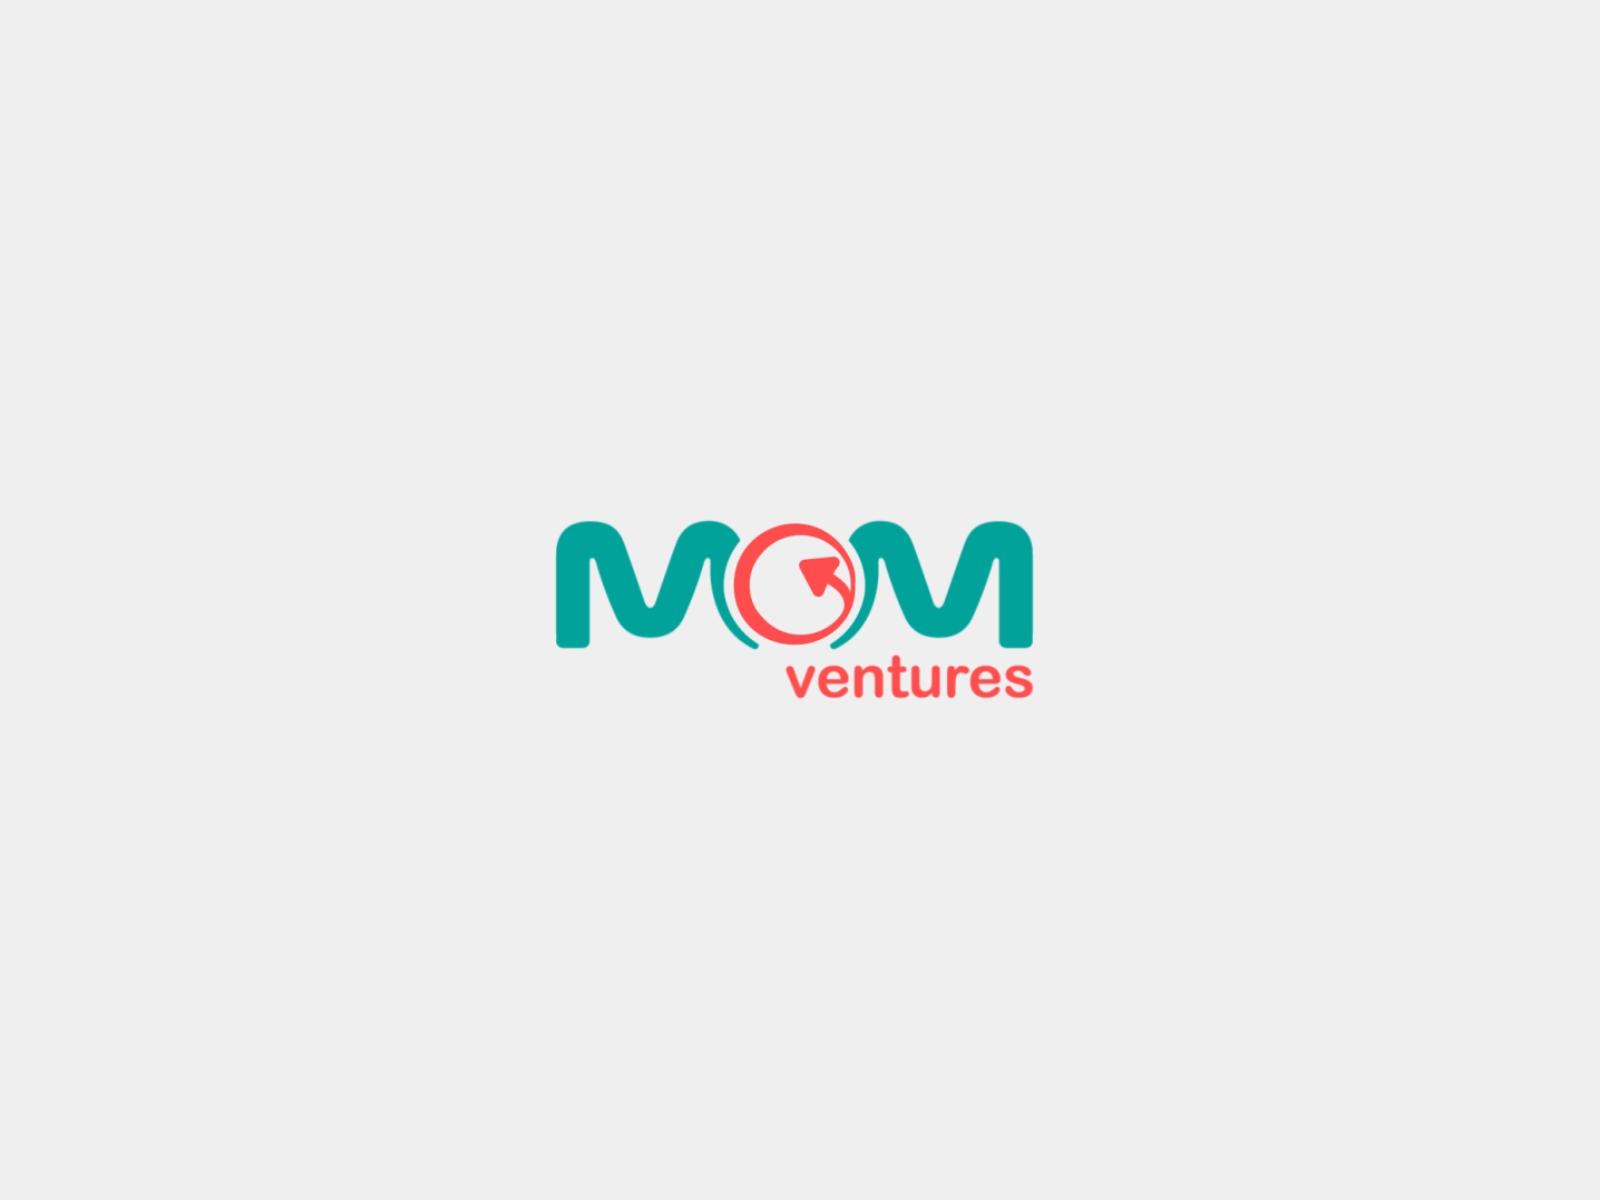 mom ventures logo motion